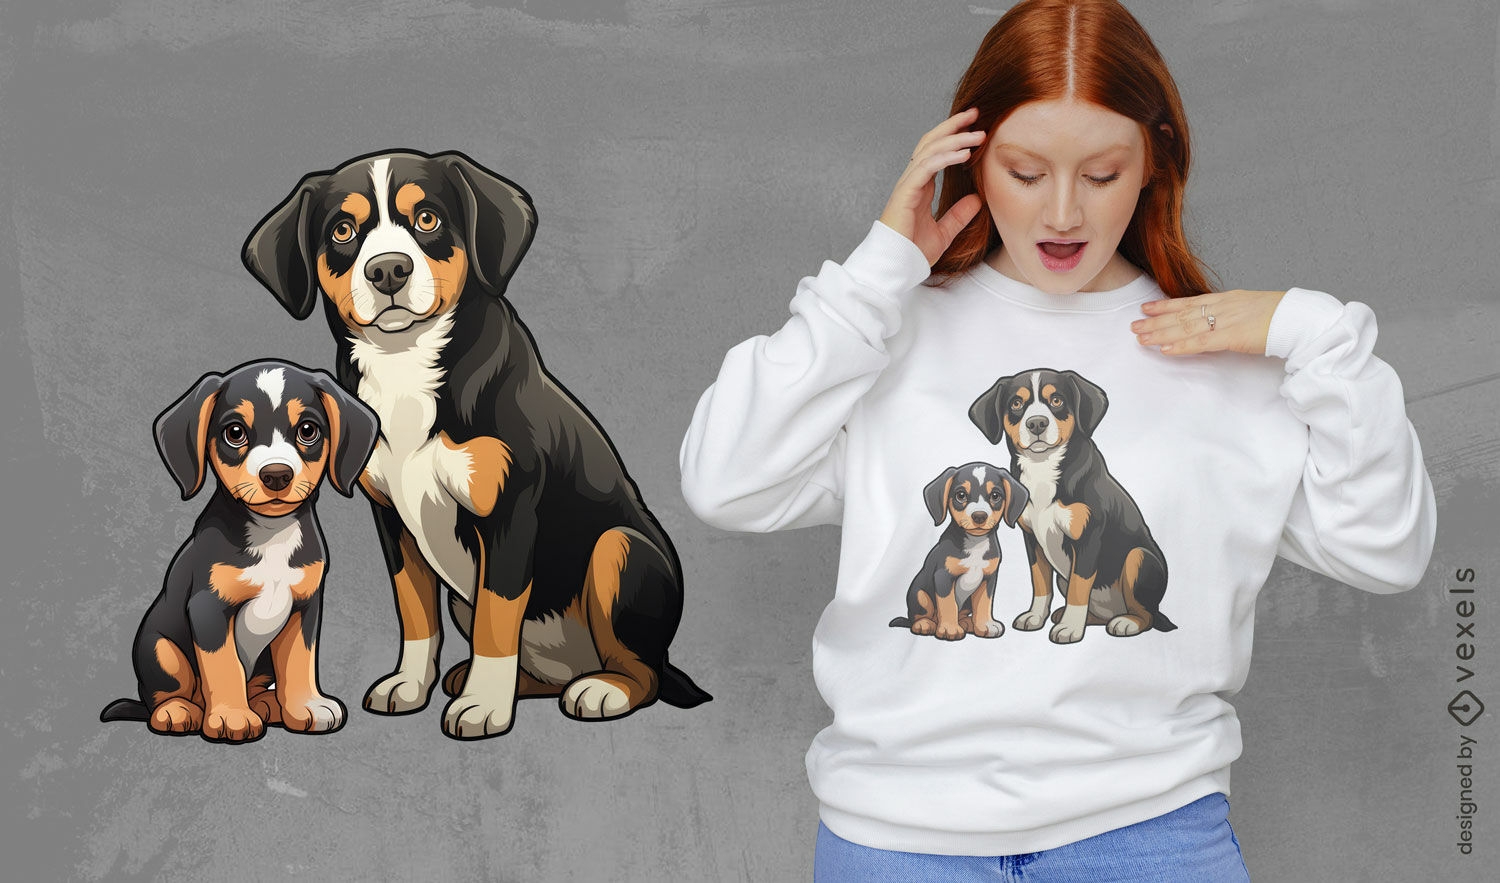 Entlebucher puppy and dog t-shirt design